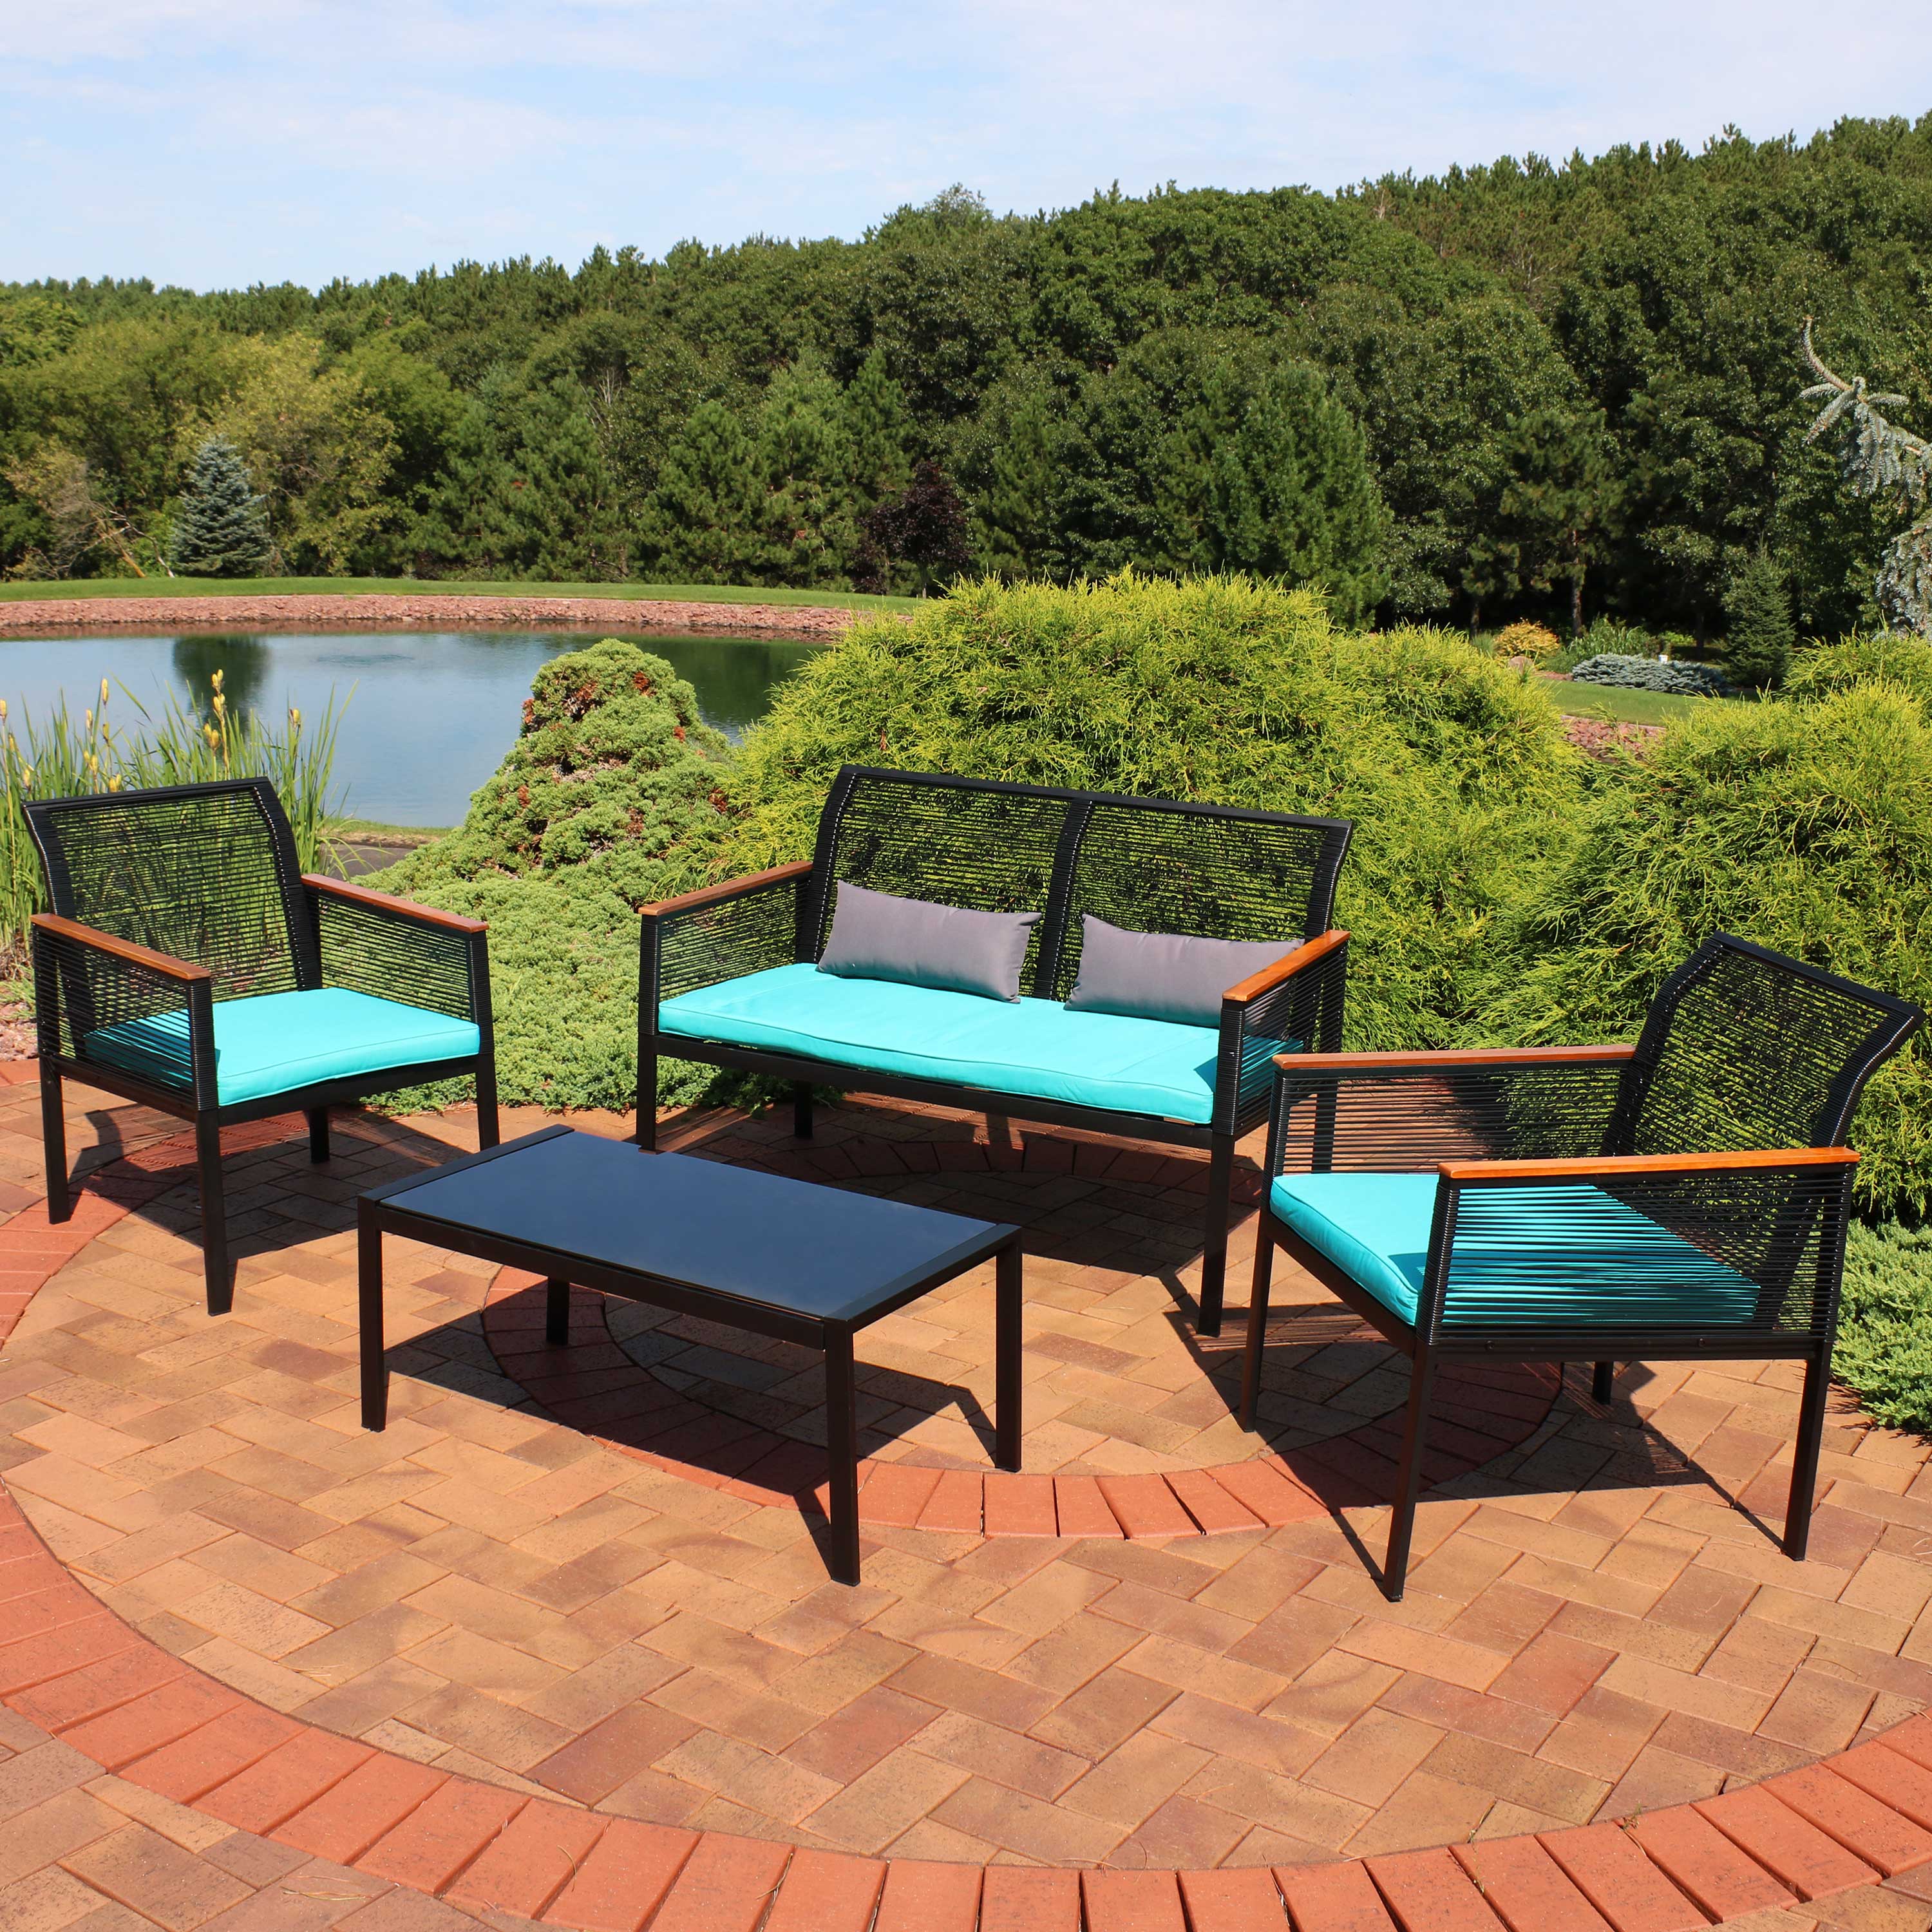 Sunnydaze Coachford 4-Piece Black Resin Rattan Outdoor Patio Furniture Set - Blue Cushions - image 2 of 10